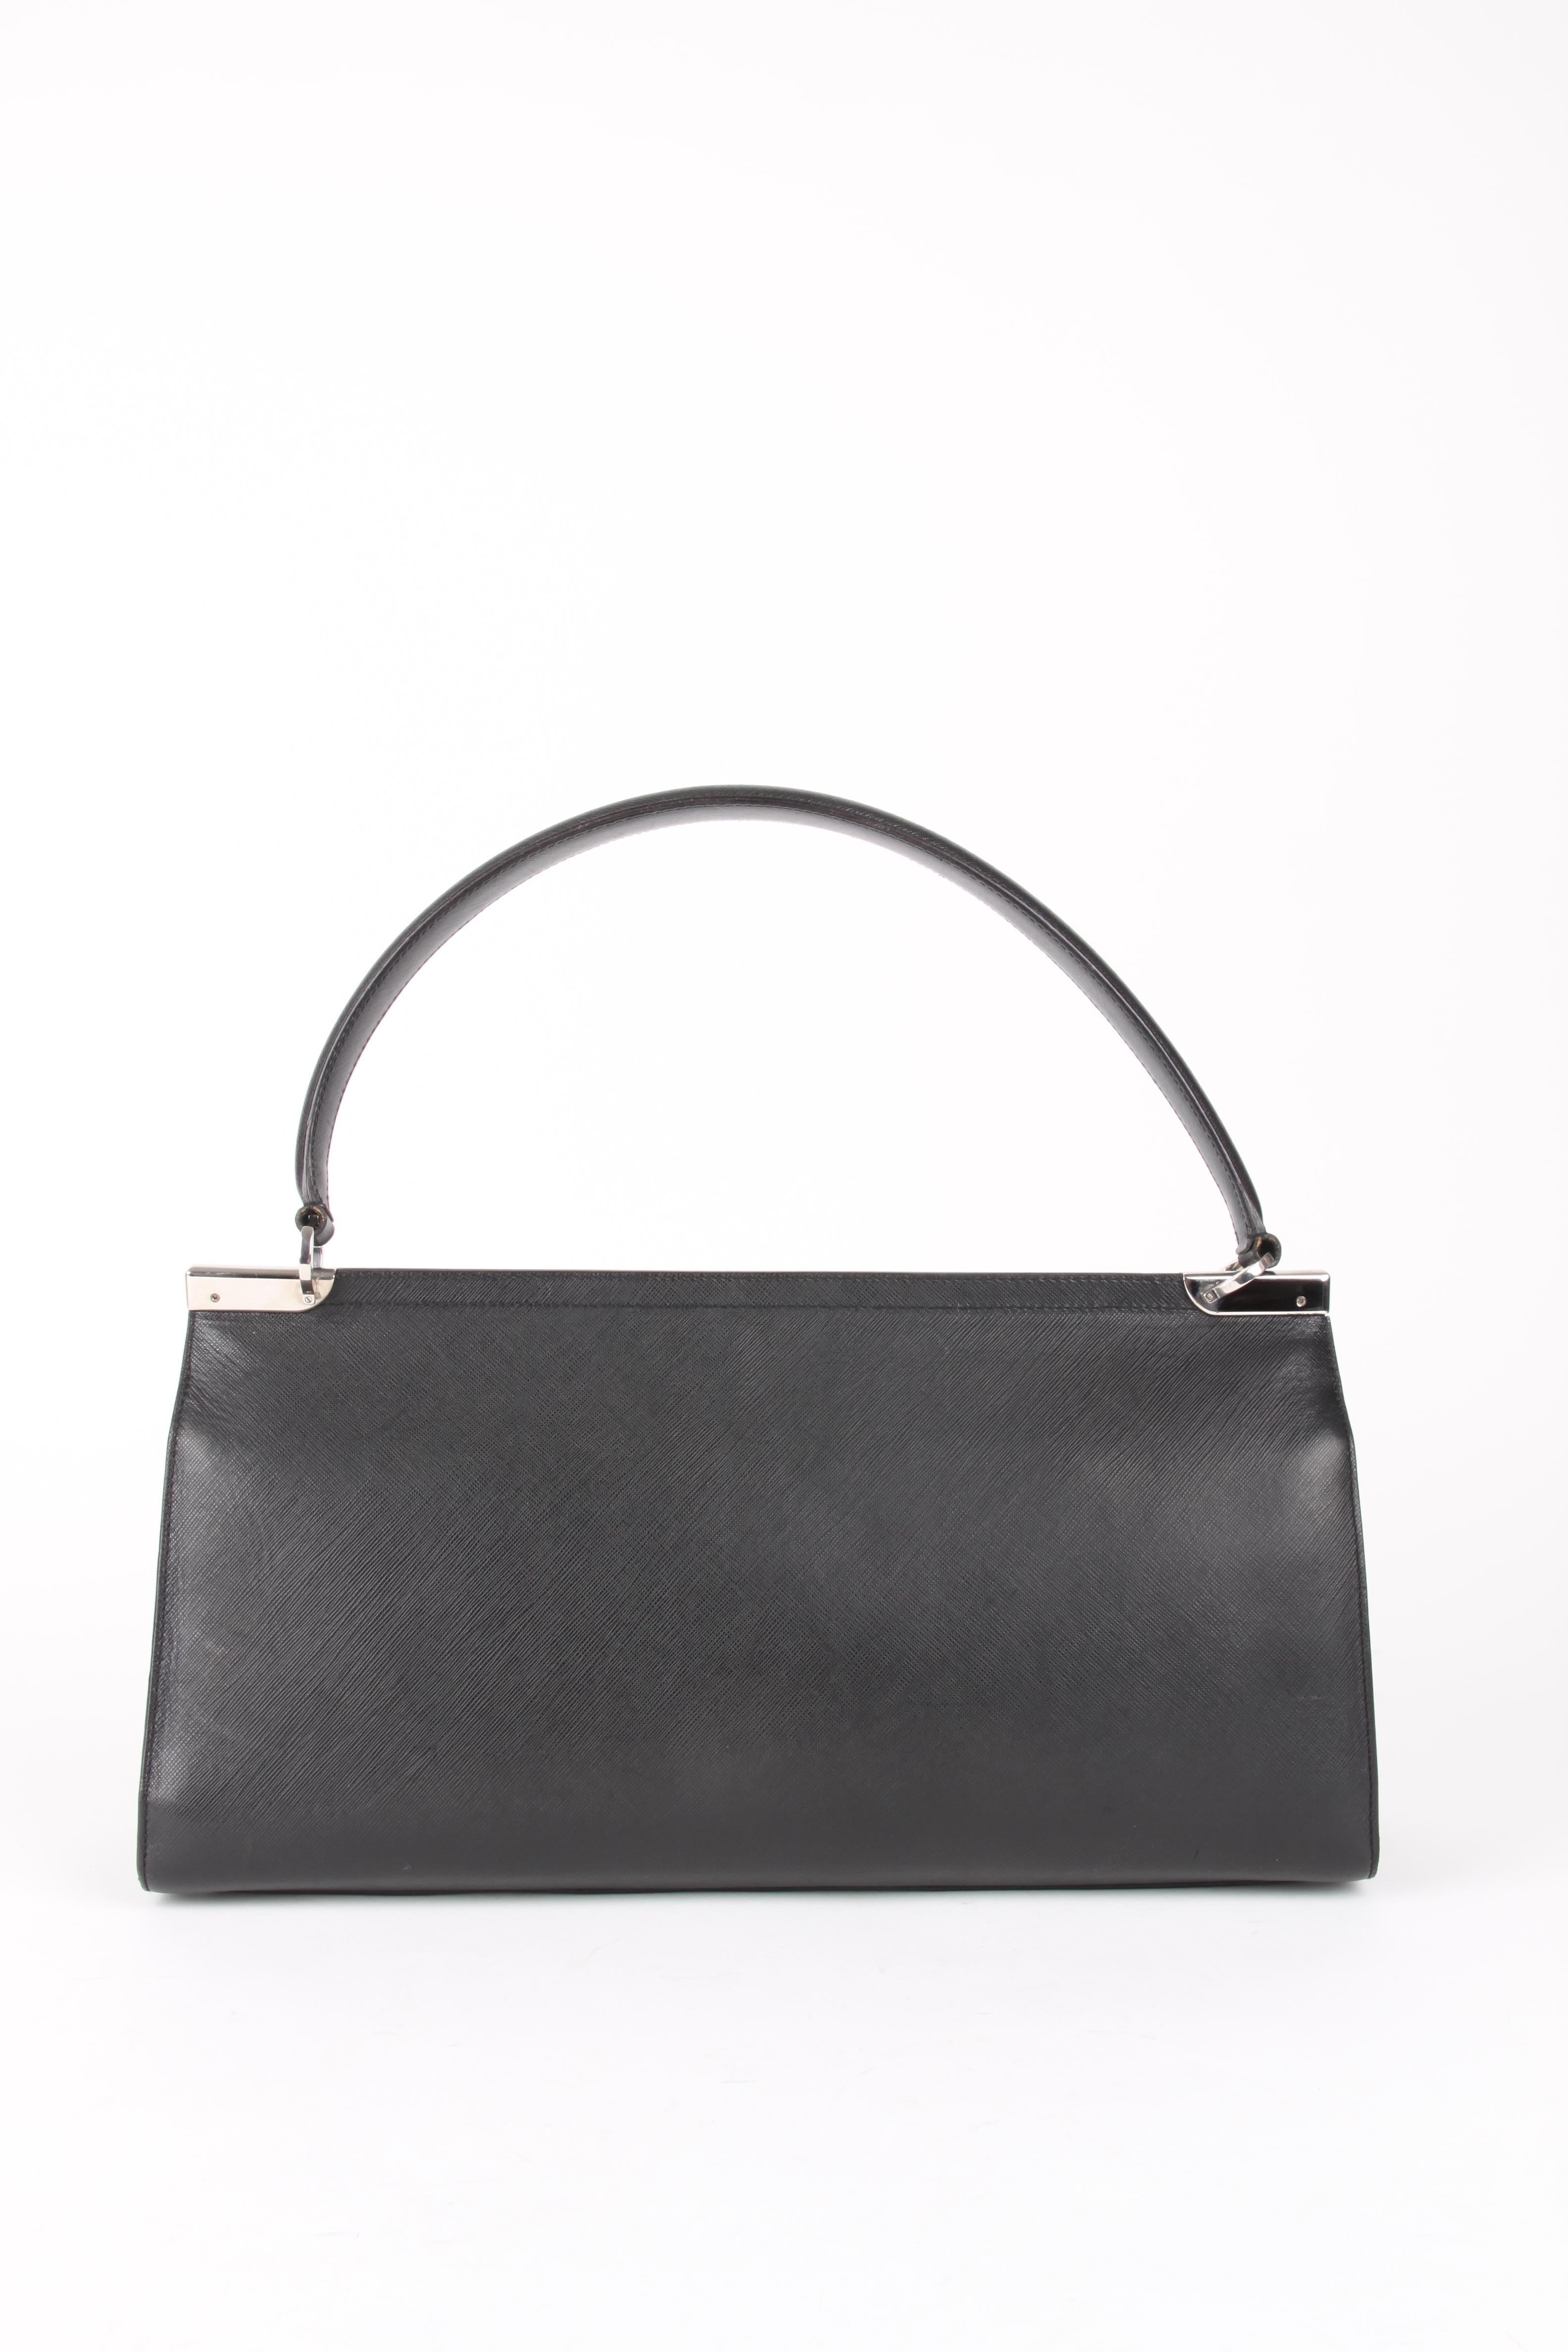 Women's or Men's   Salvatore Ferragamo Logo Plaque Leather Clutch Handbag    For Sale